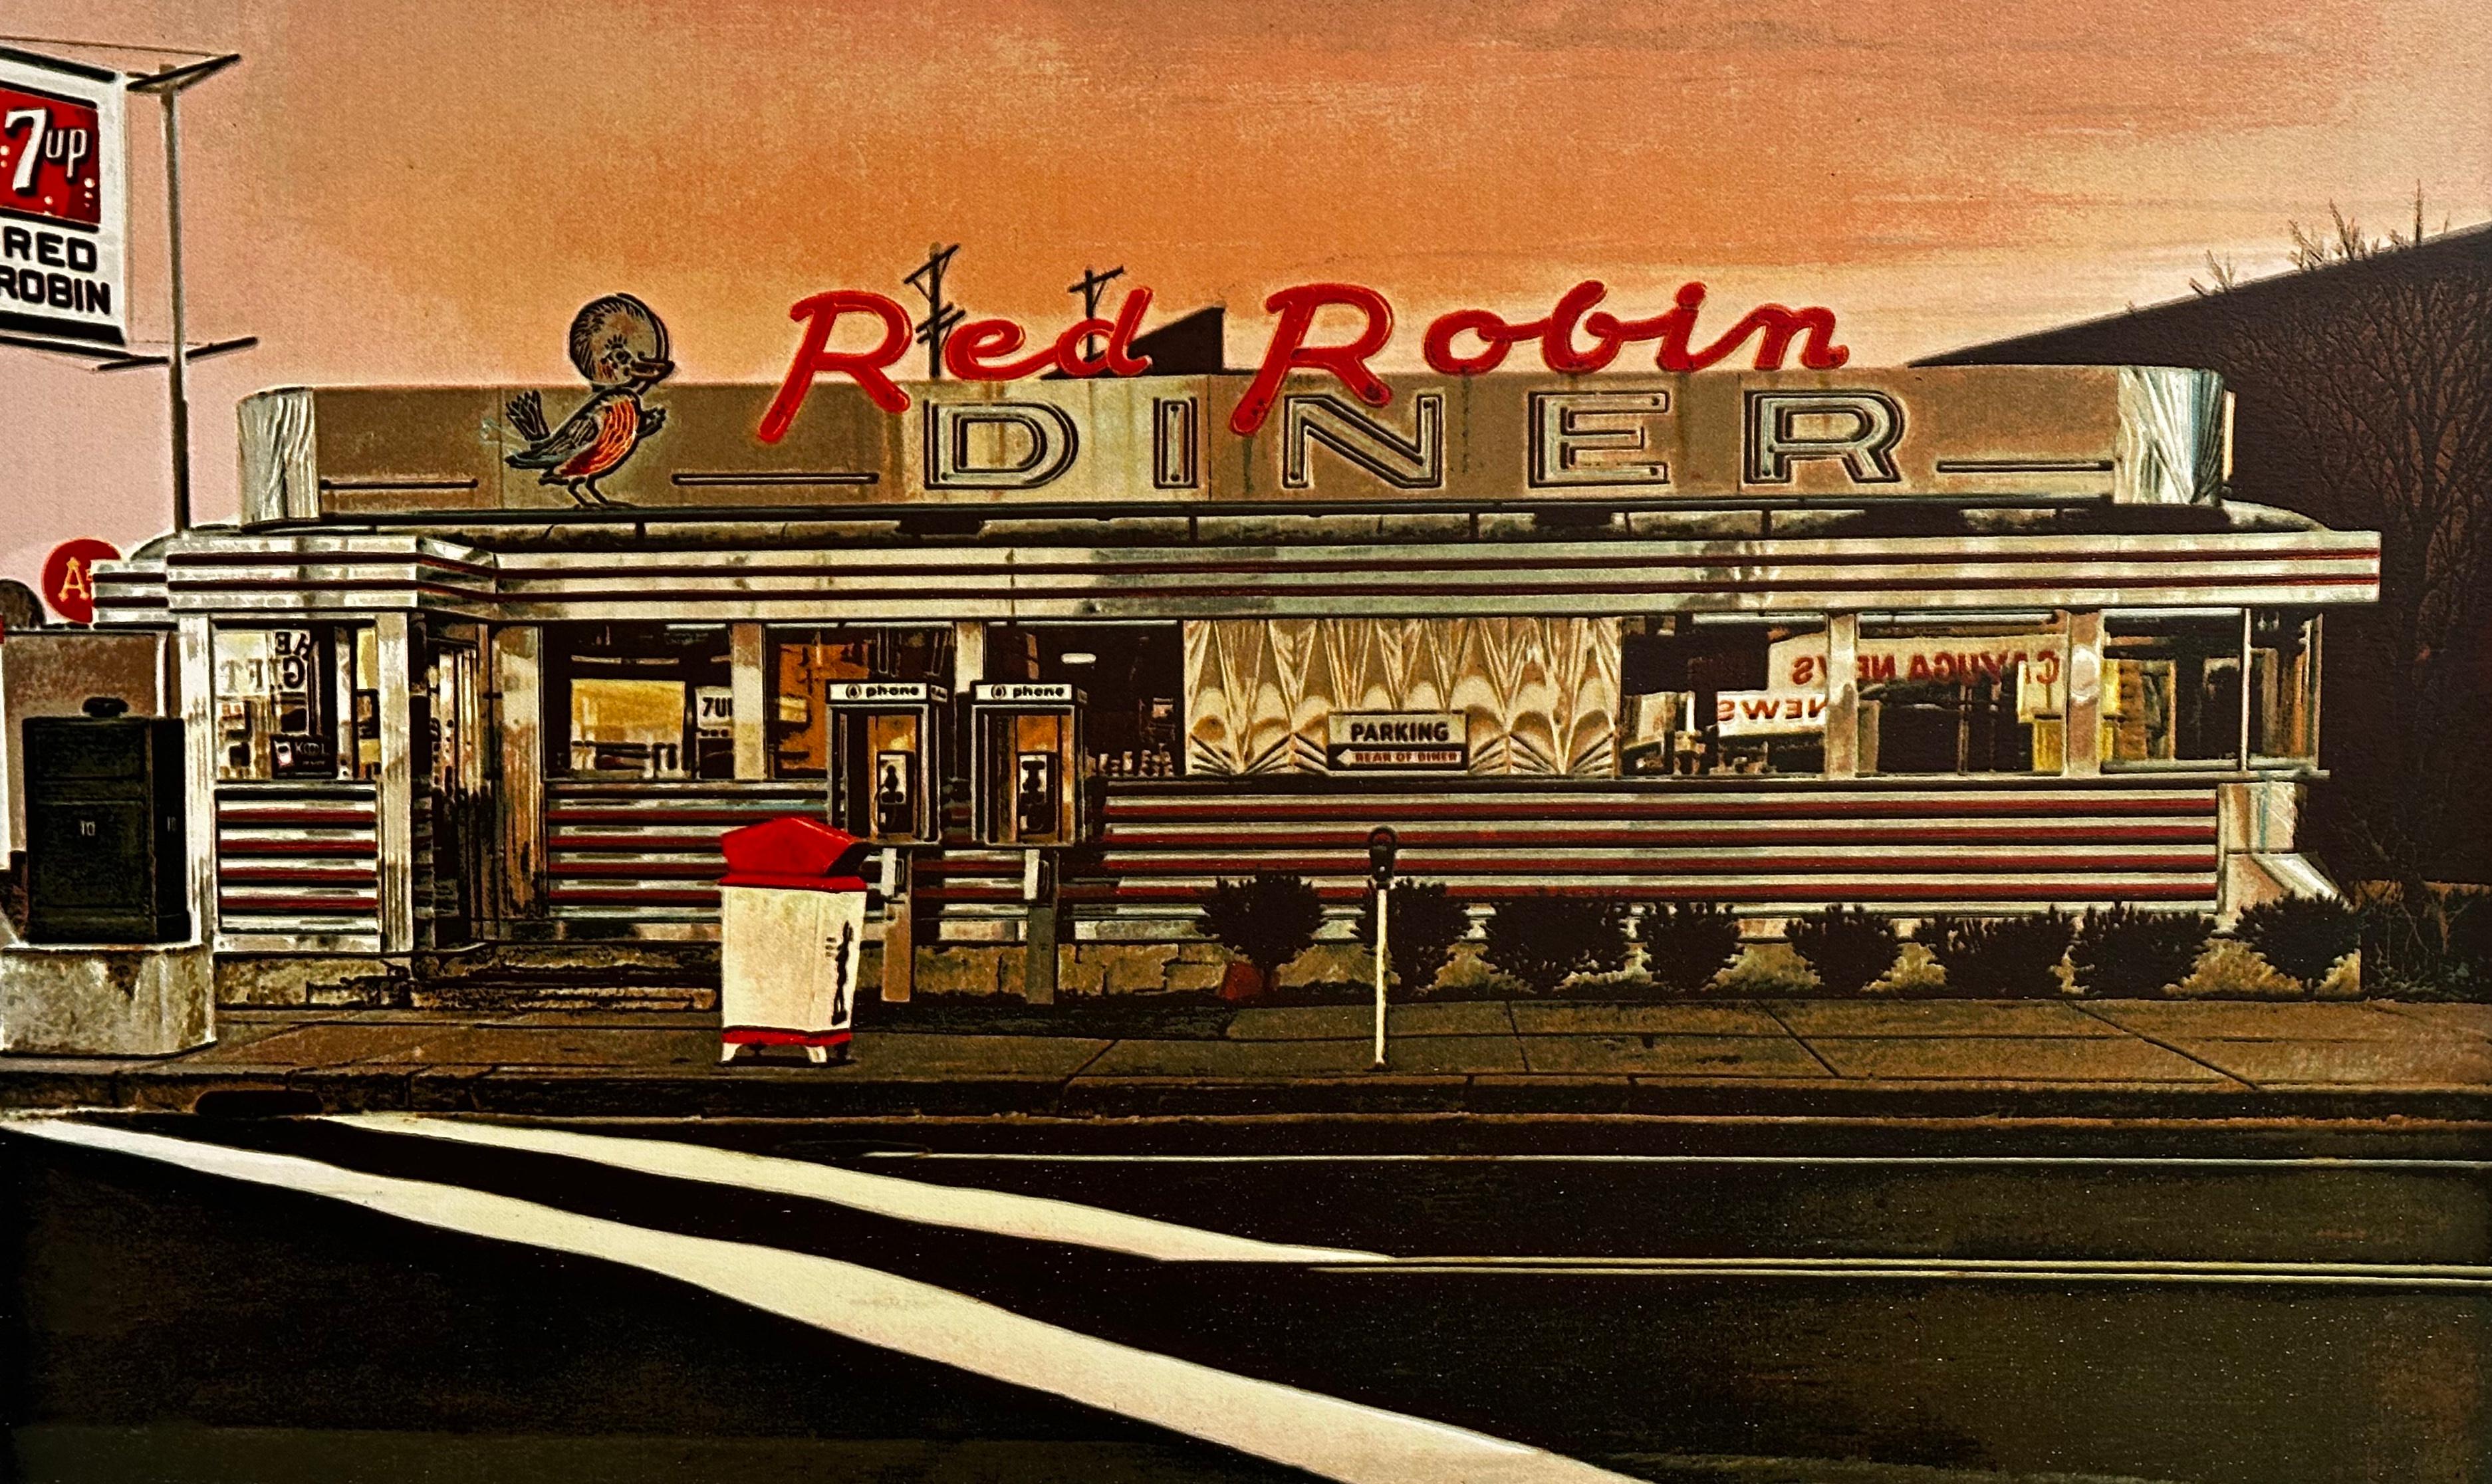 Red Robbin (Diner) - Print by John Baeder